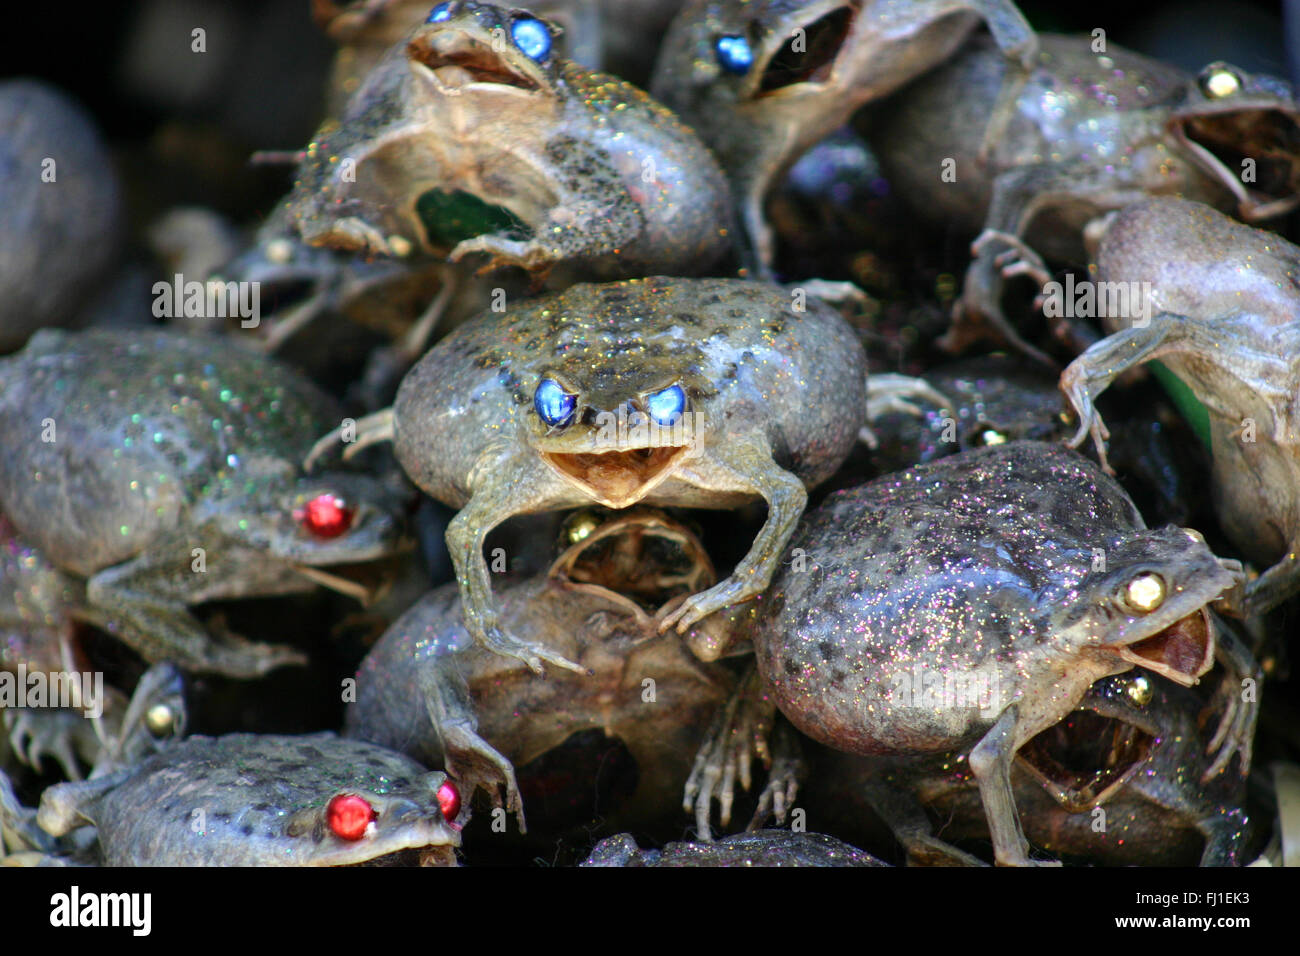 Dead frogs at Witches Market , Mercado de Hechiceria , la Paz, Bolivia Stock Photo